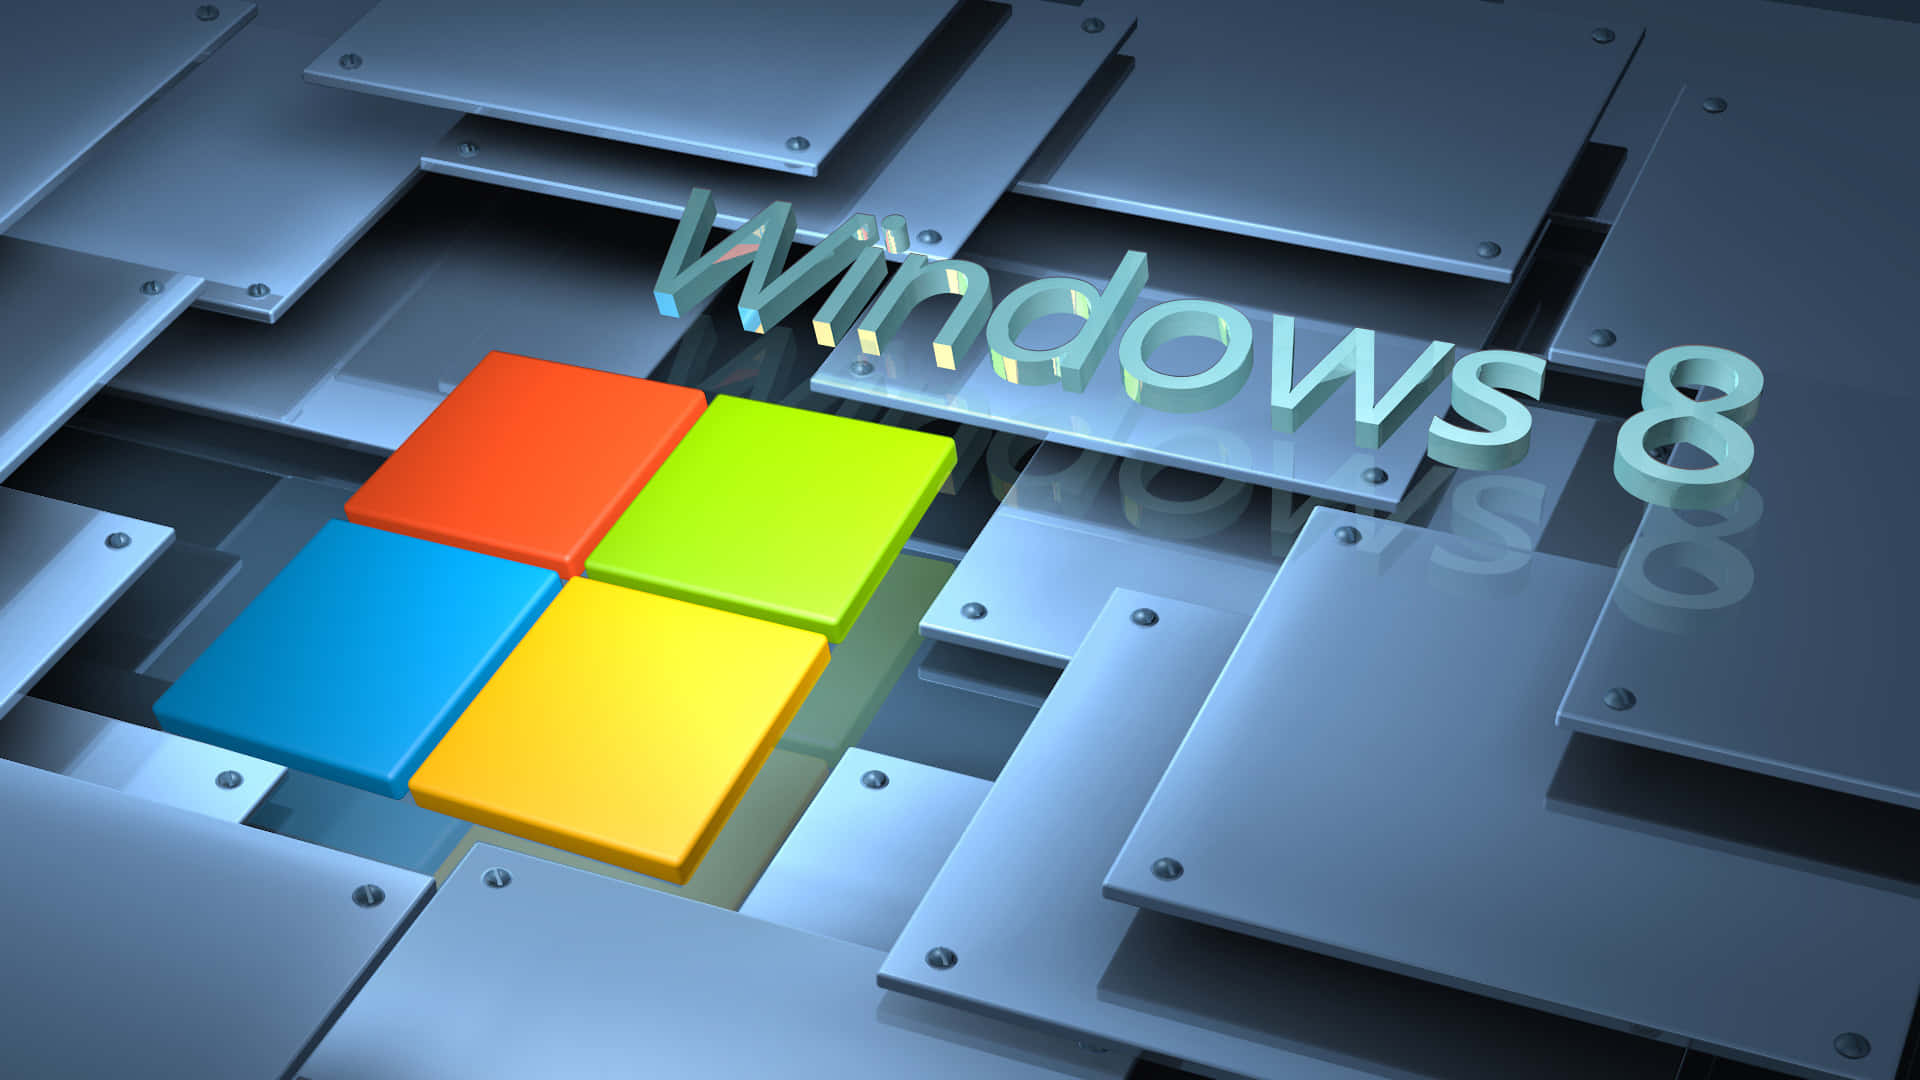 Windows8 1920 X 1080 Baggrund